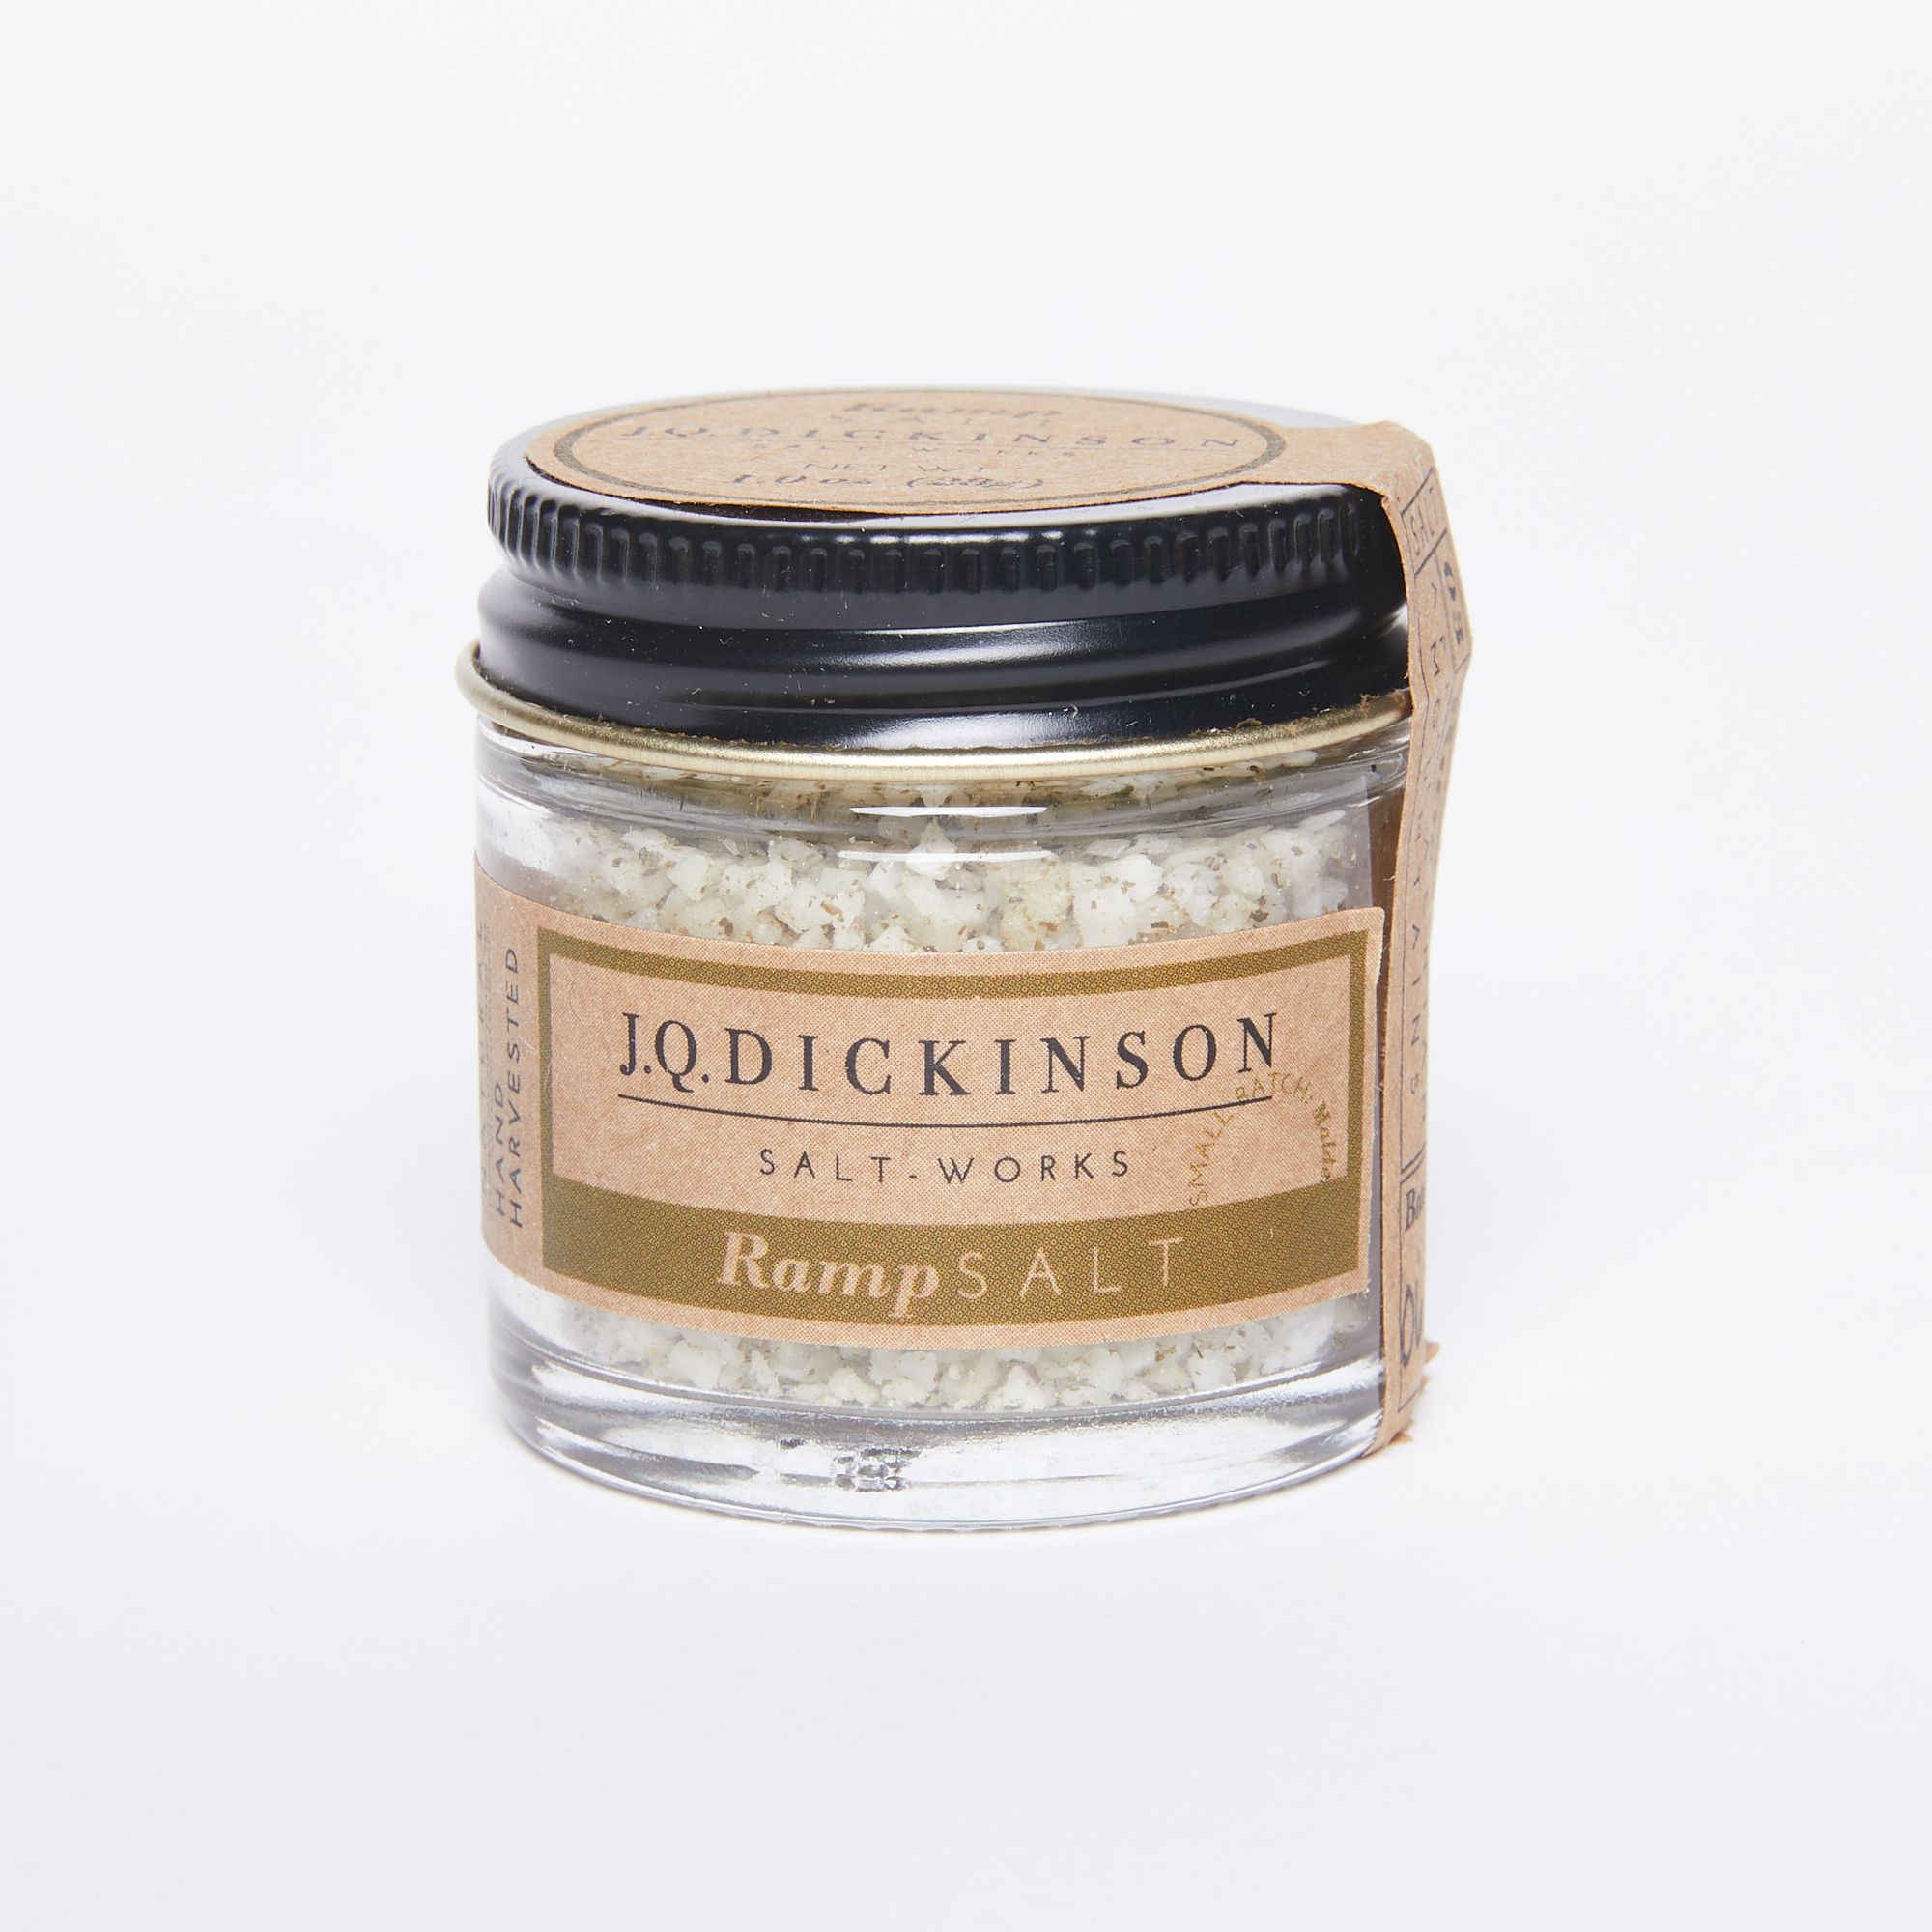 Round glass jar full of large salt crystals with a black screw lid and a natural color label that reads "JQ Dickinson Salt Works Ramp Salt"